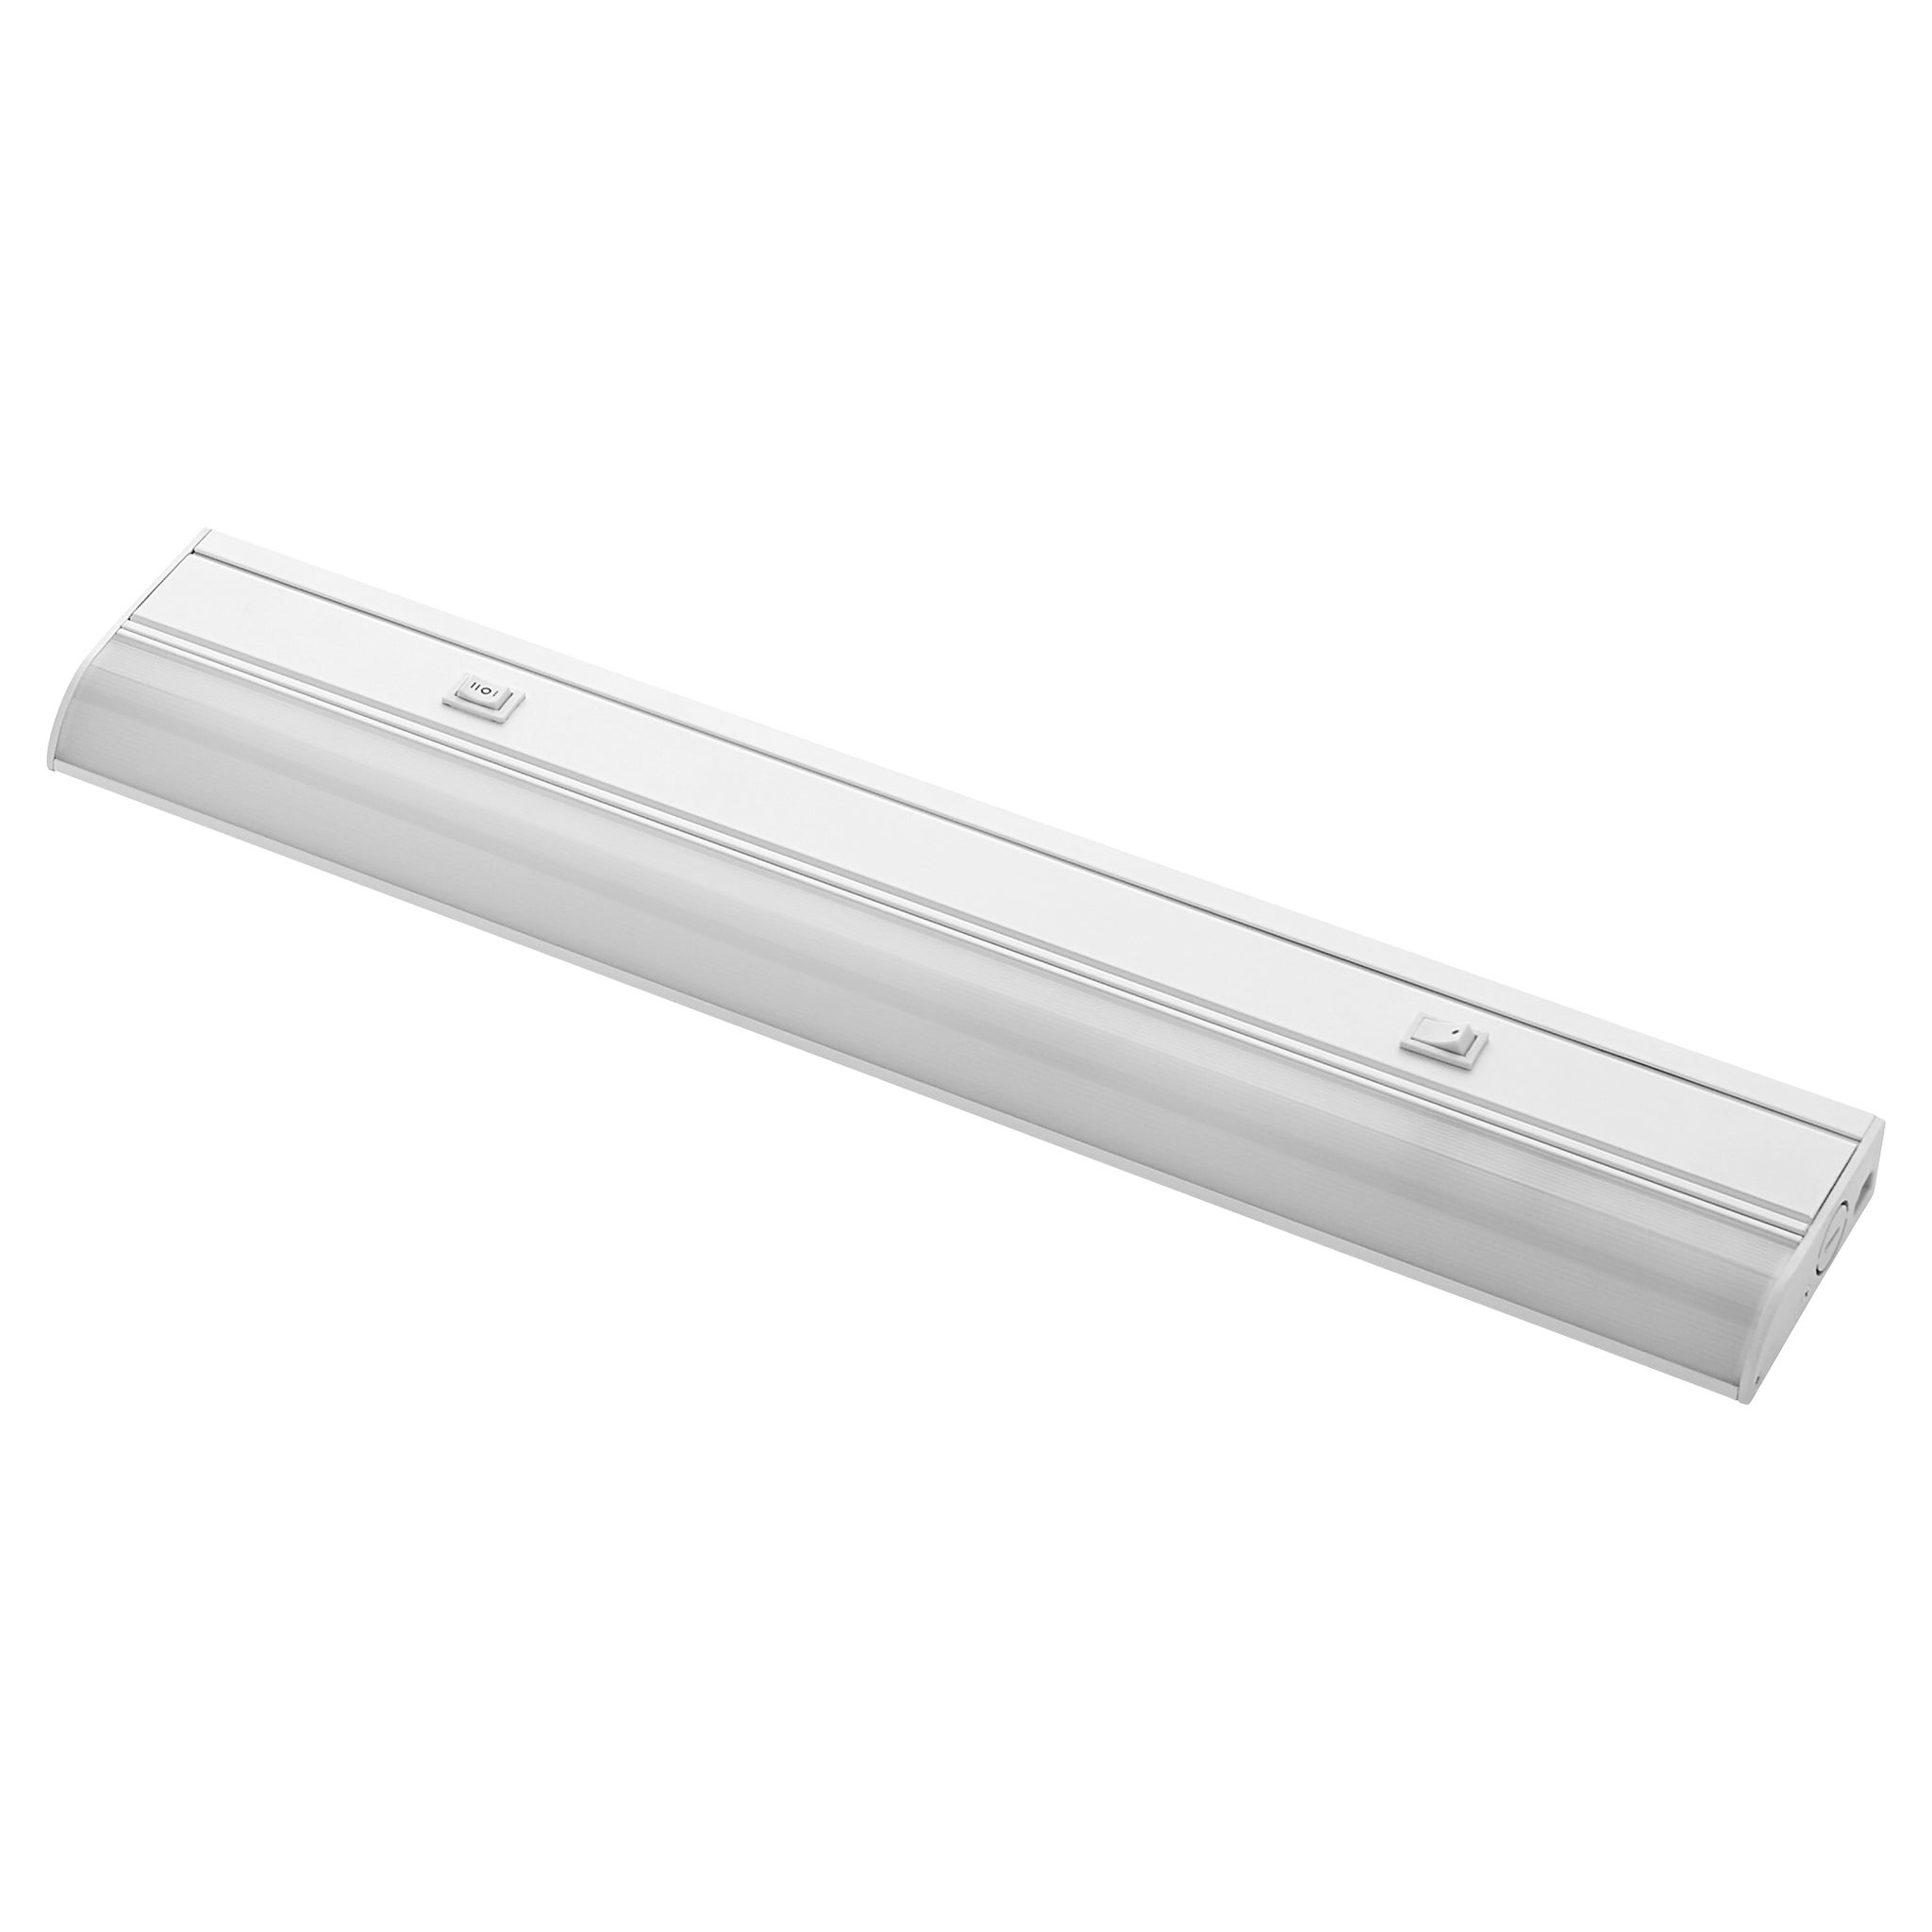 Details about   Quorum 85024-2-6 Signature 25 inch White Undercabinet Light Fixture 